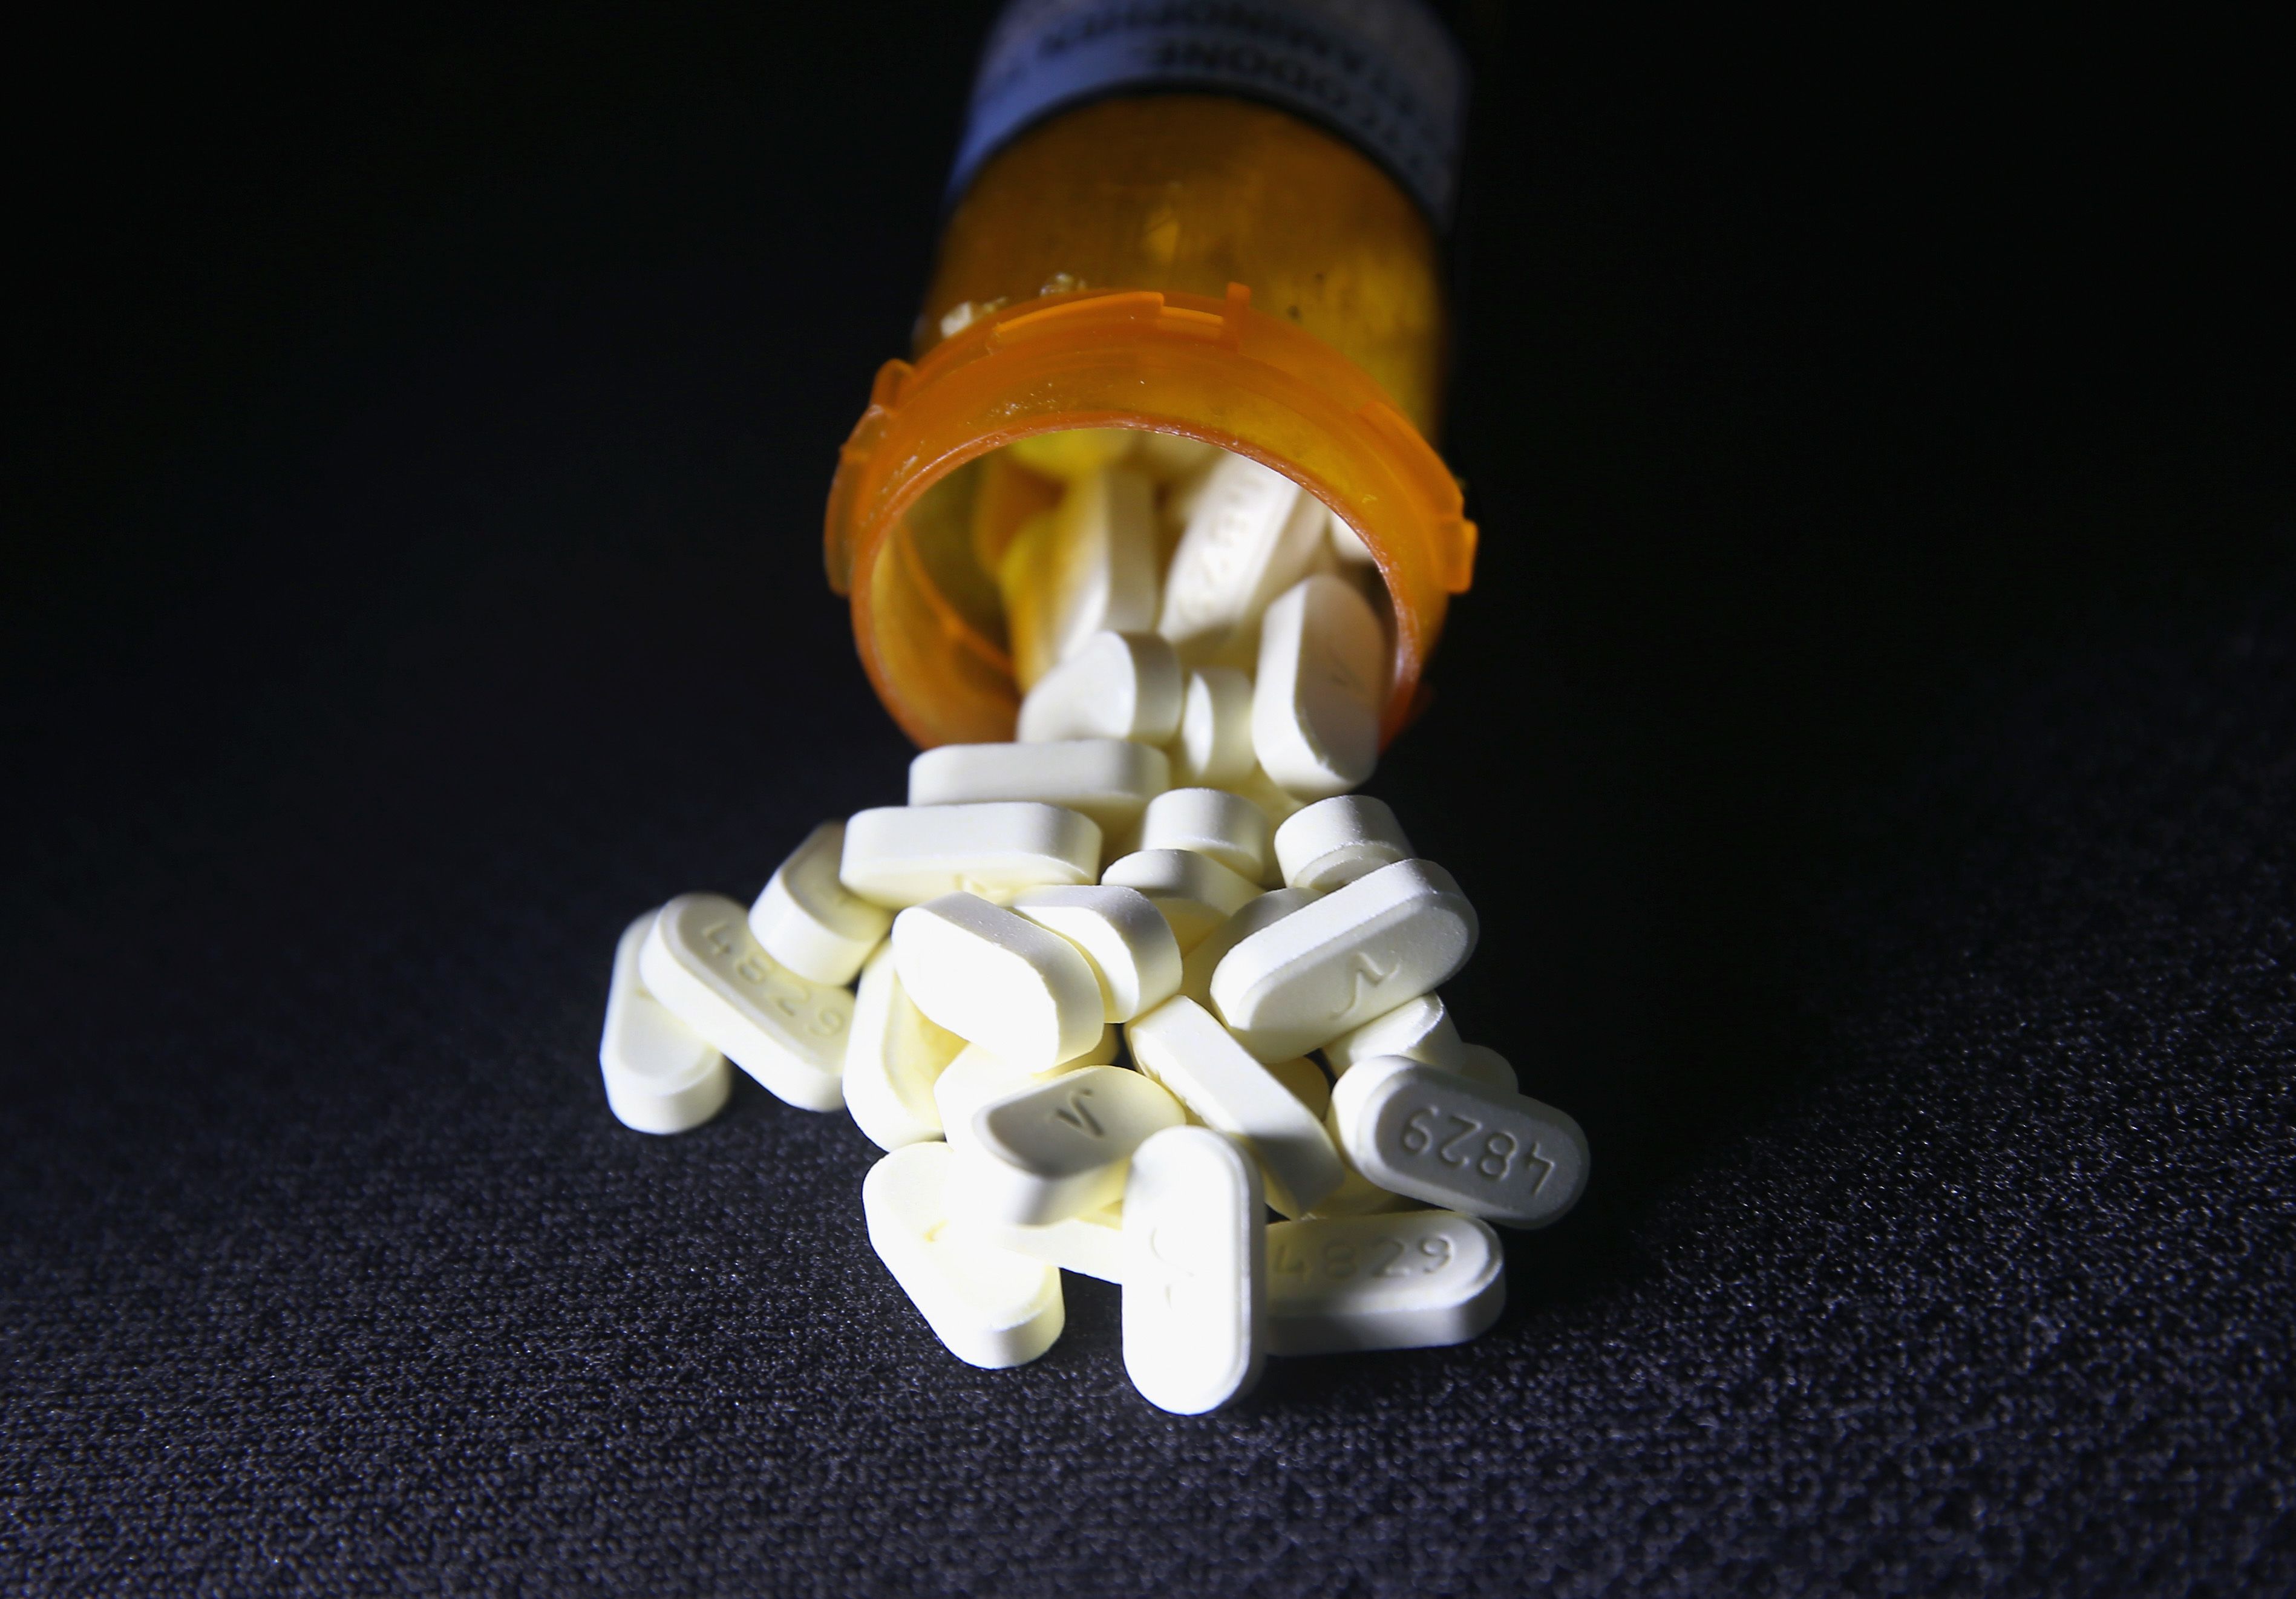 Opioids: Painkillers, heroin & fentanyl